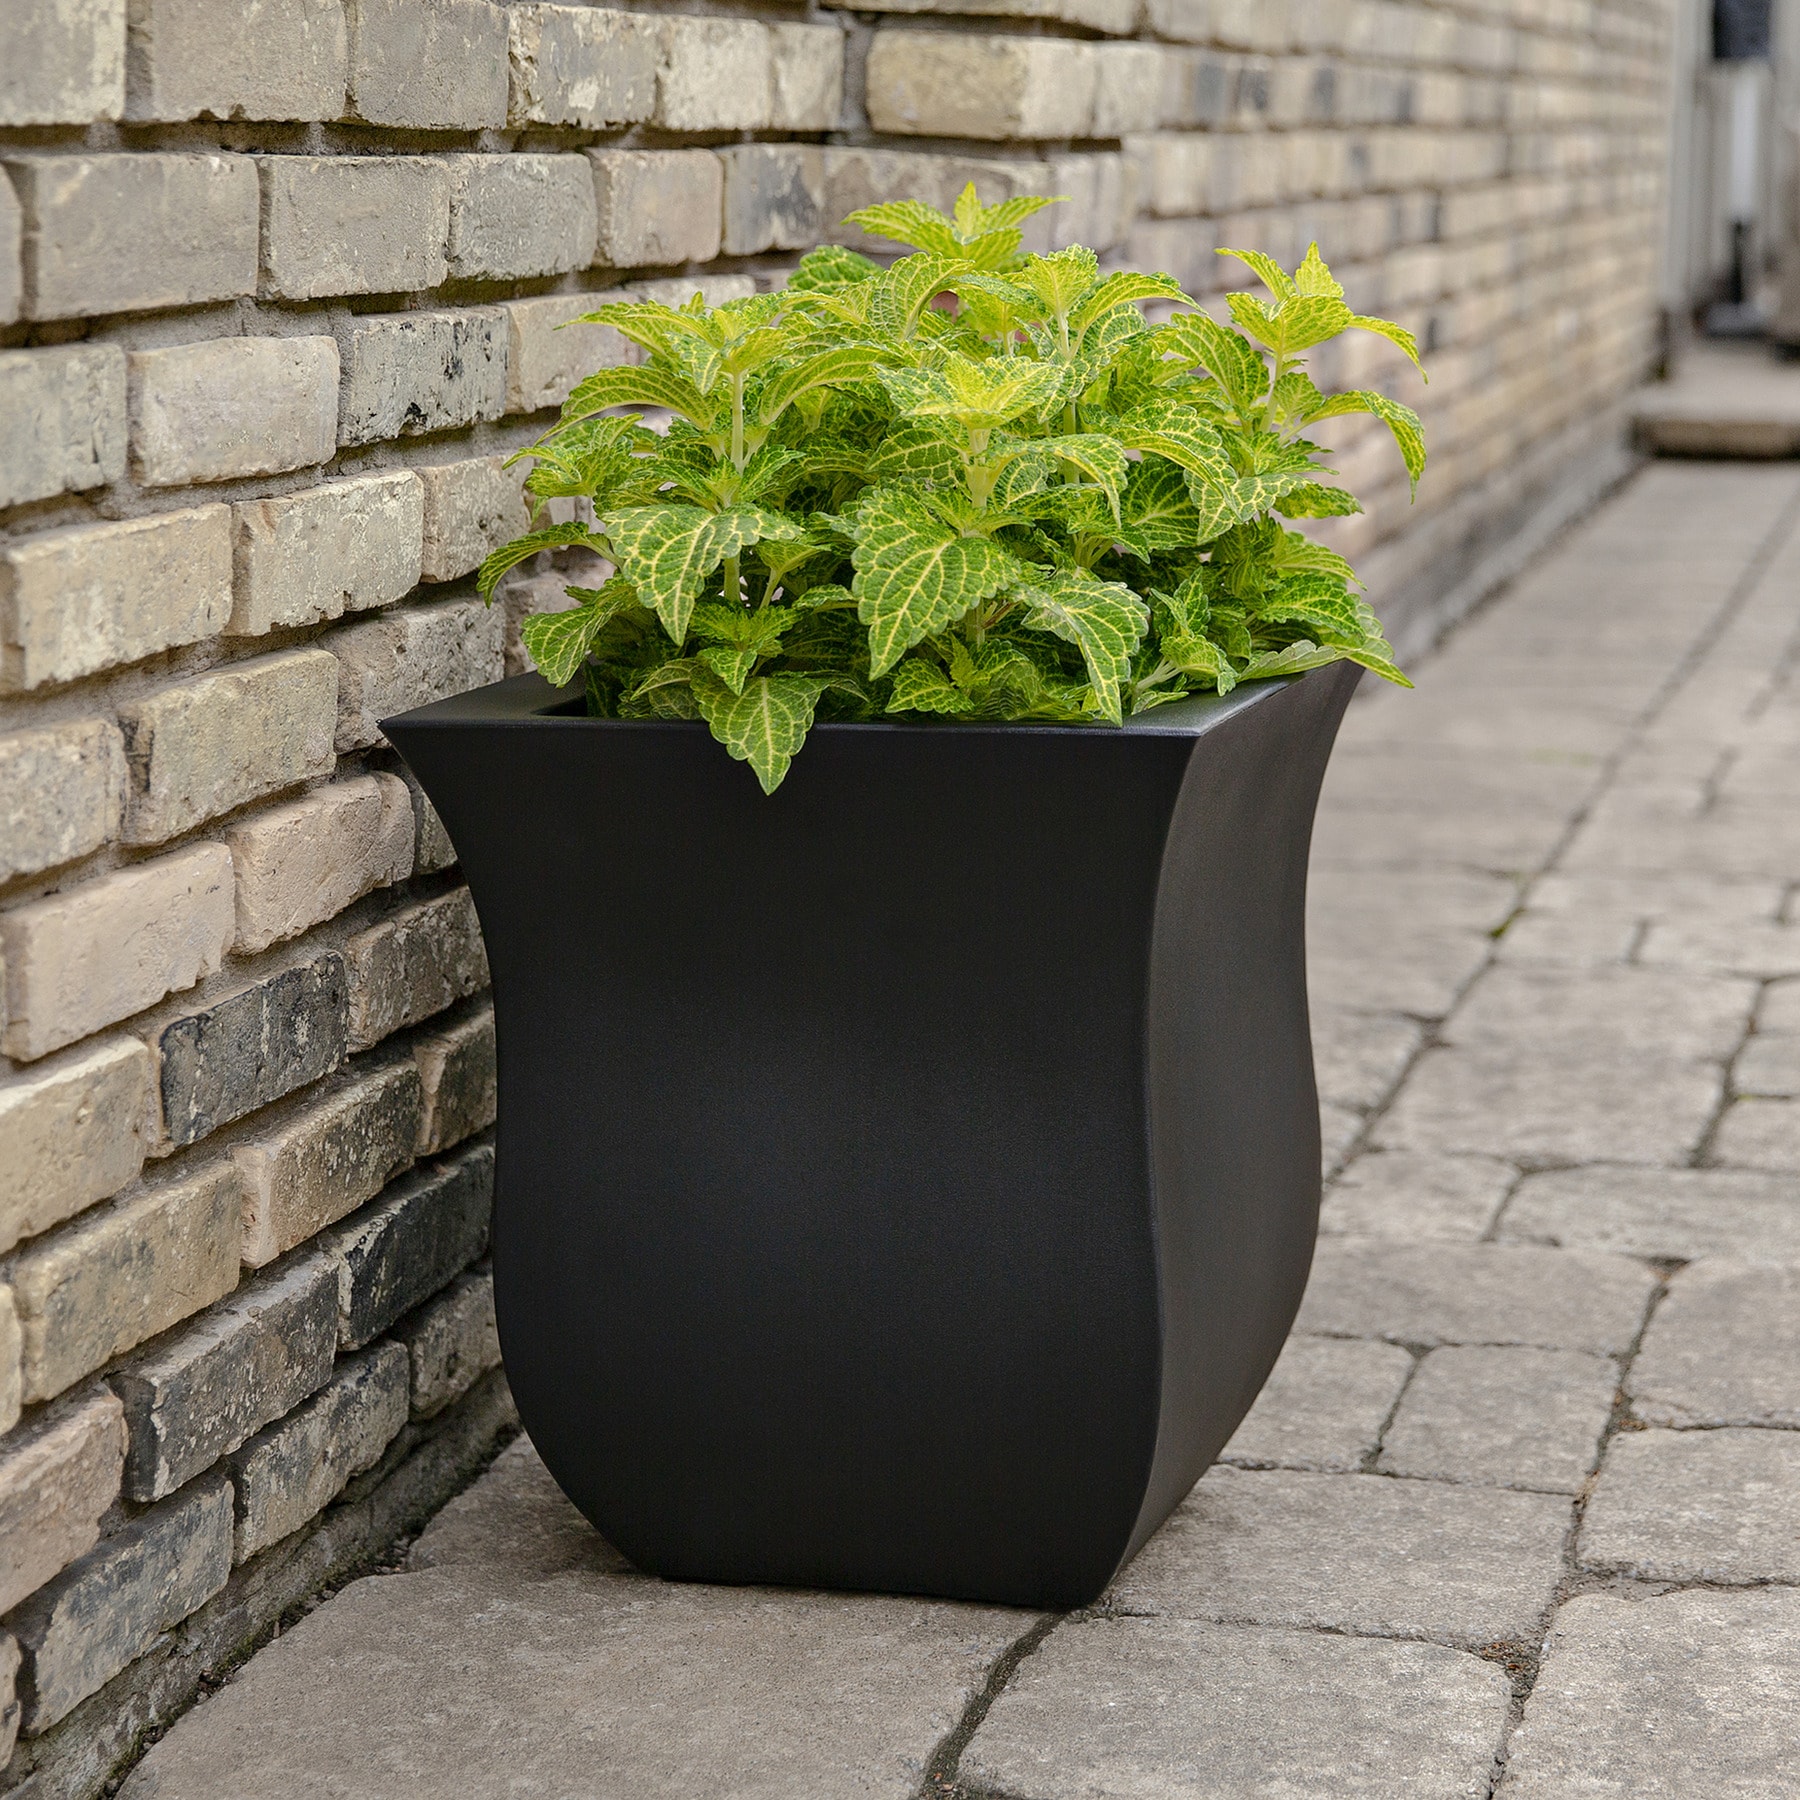 Mayne Column Planter Decorative Pot Tall Garden 16 Inch Square Black Plastic New 